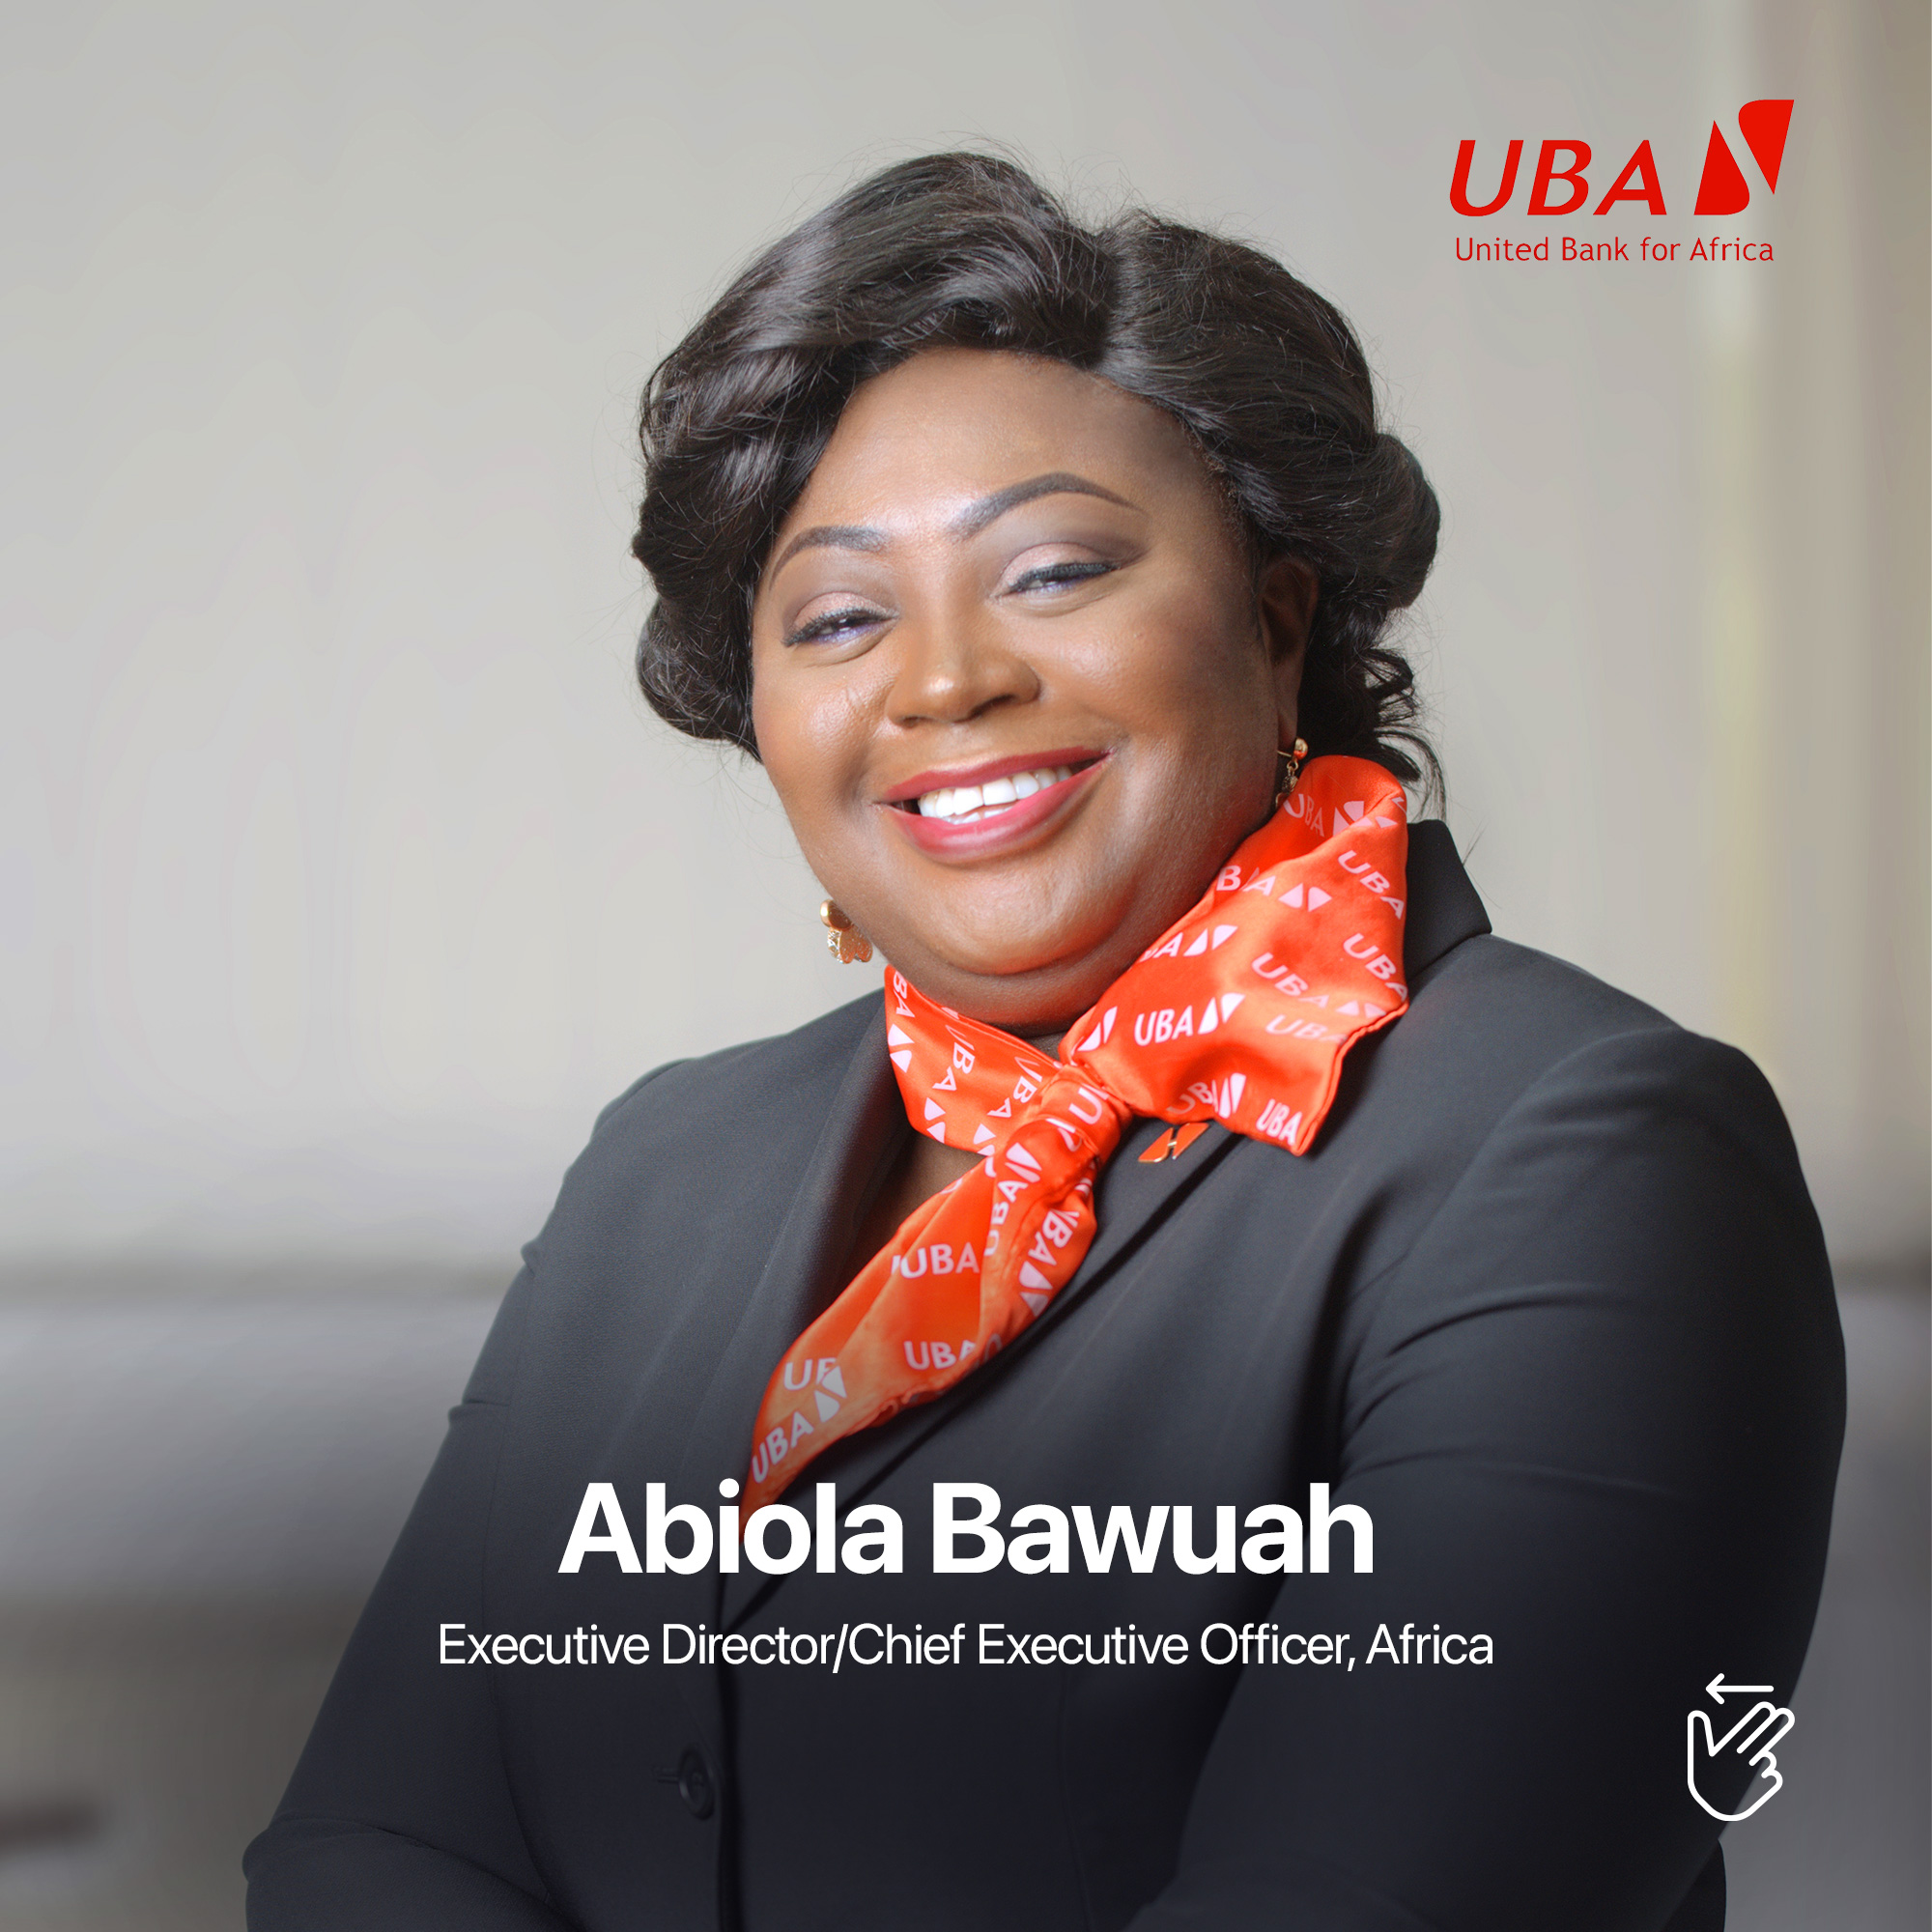 Première femme DG de UBA Africa Abiola Bawuah